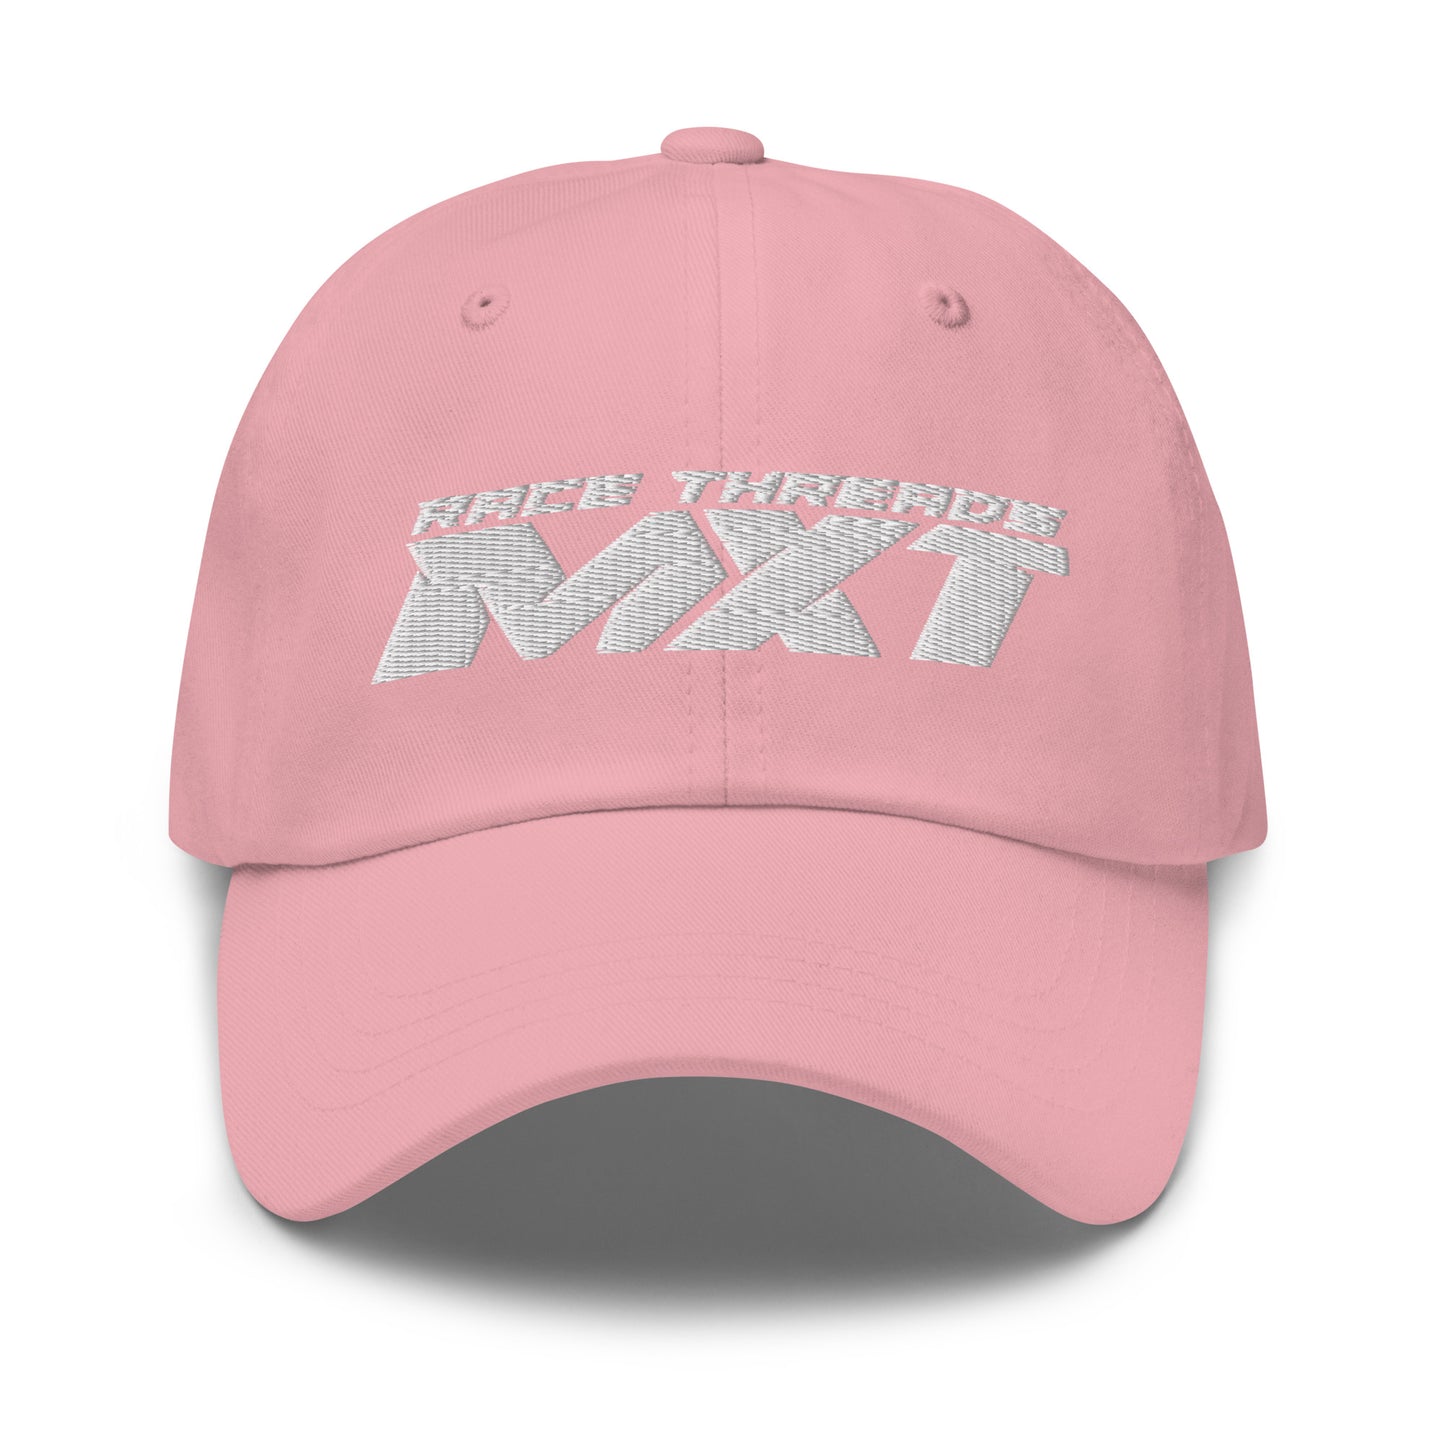 Race Threads MXT Dad Hat